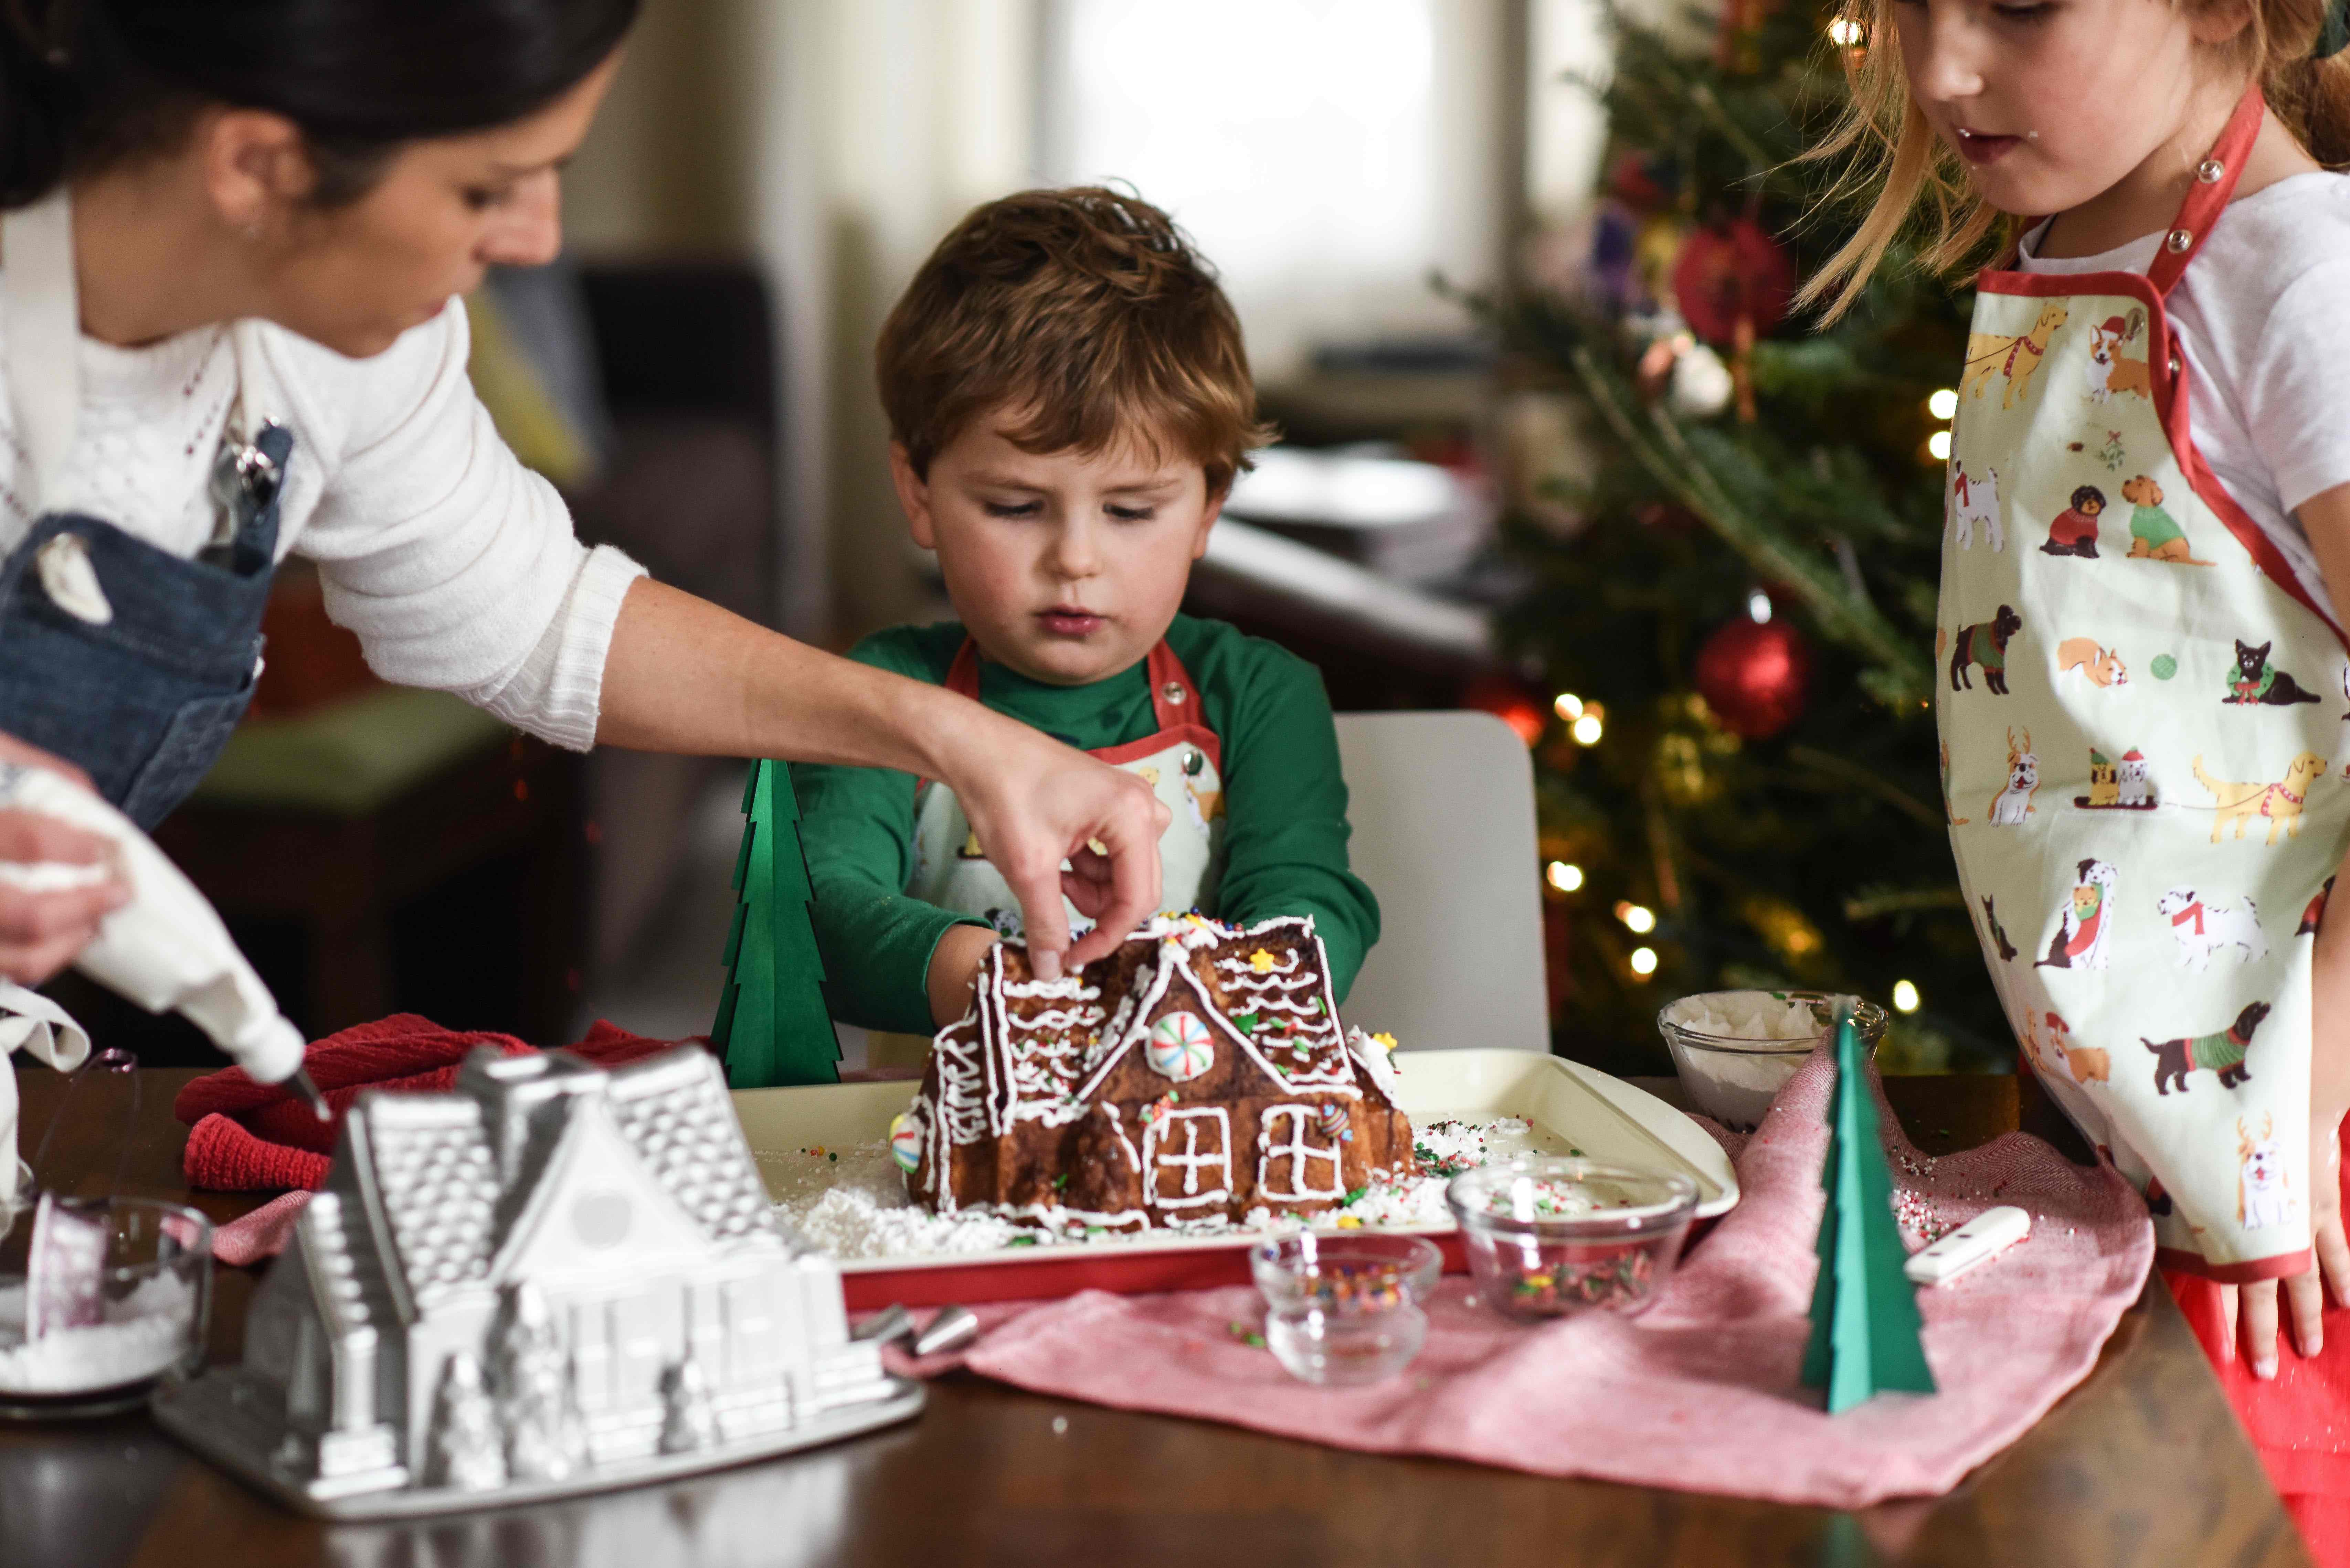 How to Make a Cozy Gingerbread House Bundt Cake - Eleanor Rose Home